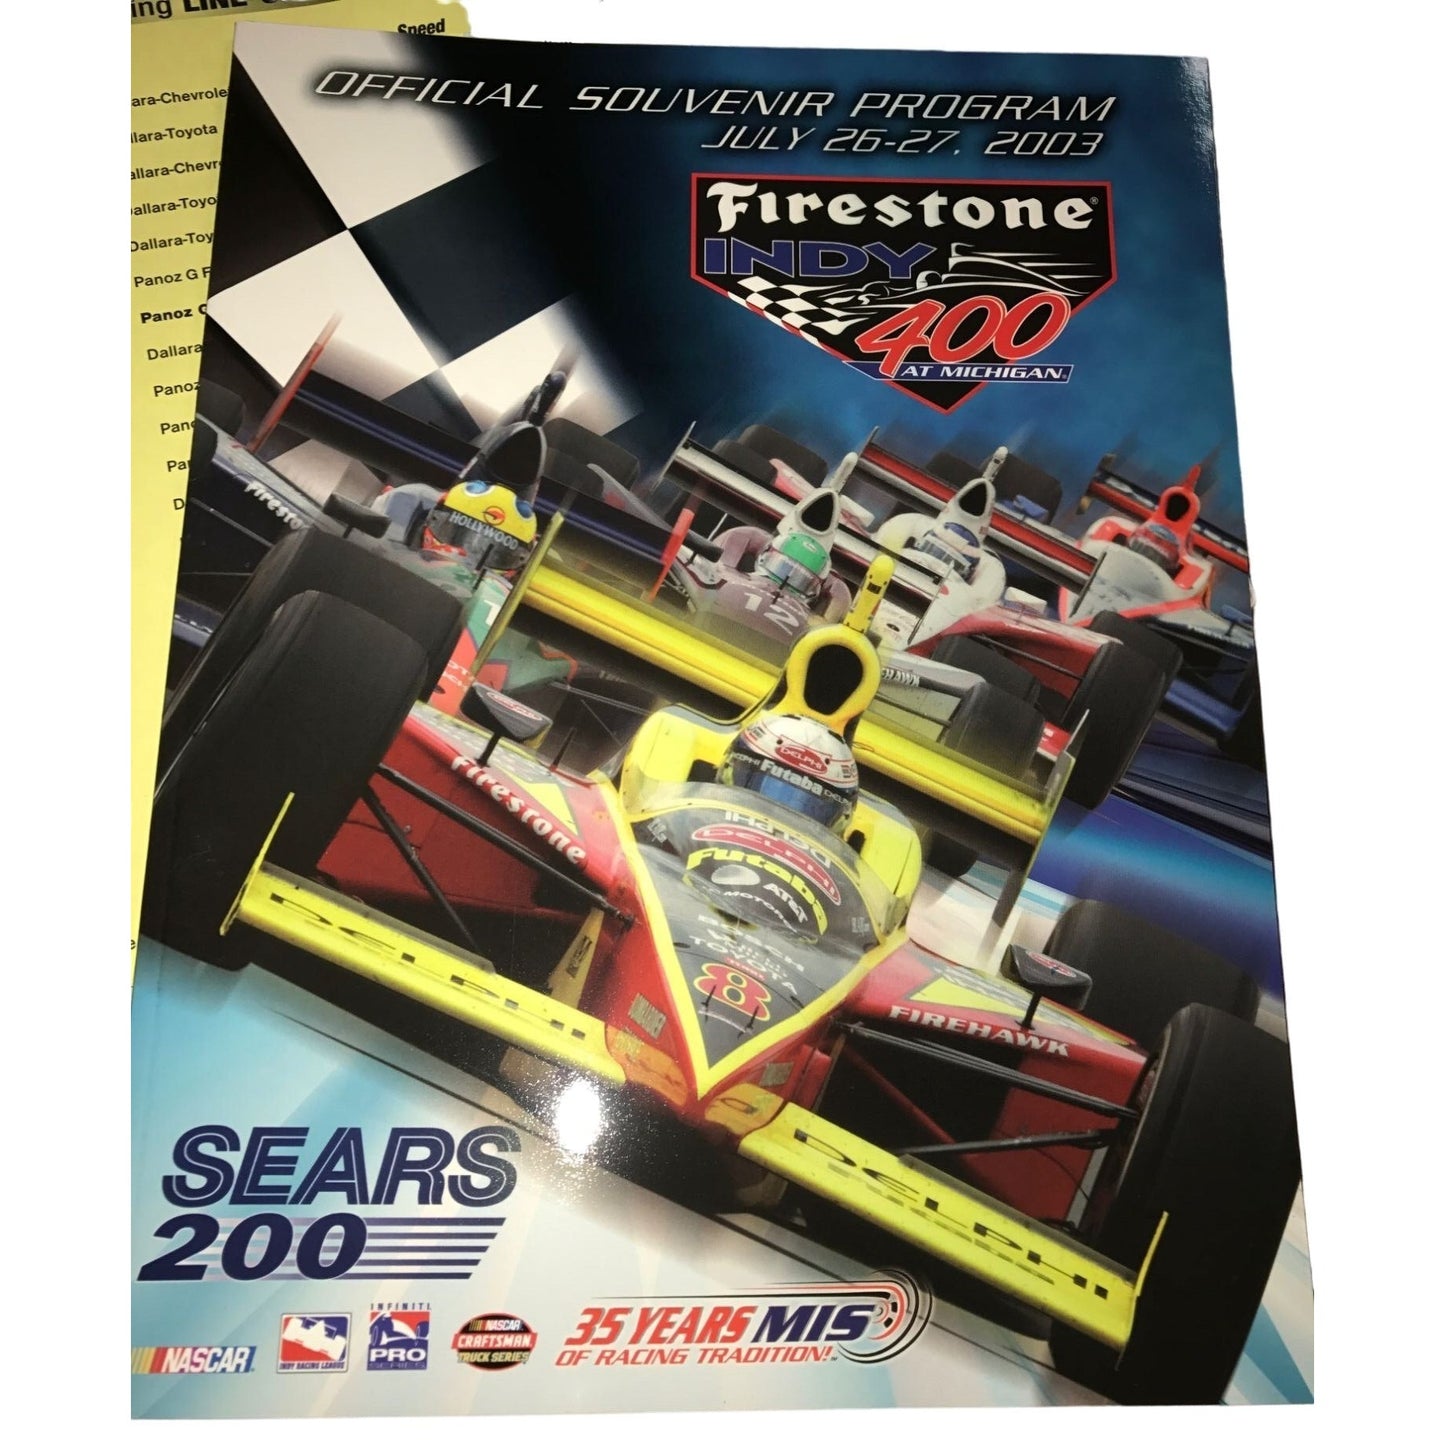 Firestone Indy 400 Race Program - Michigan Speedway 2003 - Sports Event Memorabilia